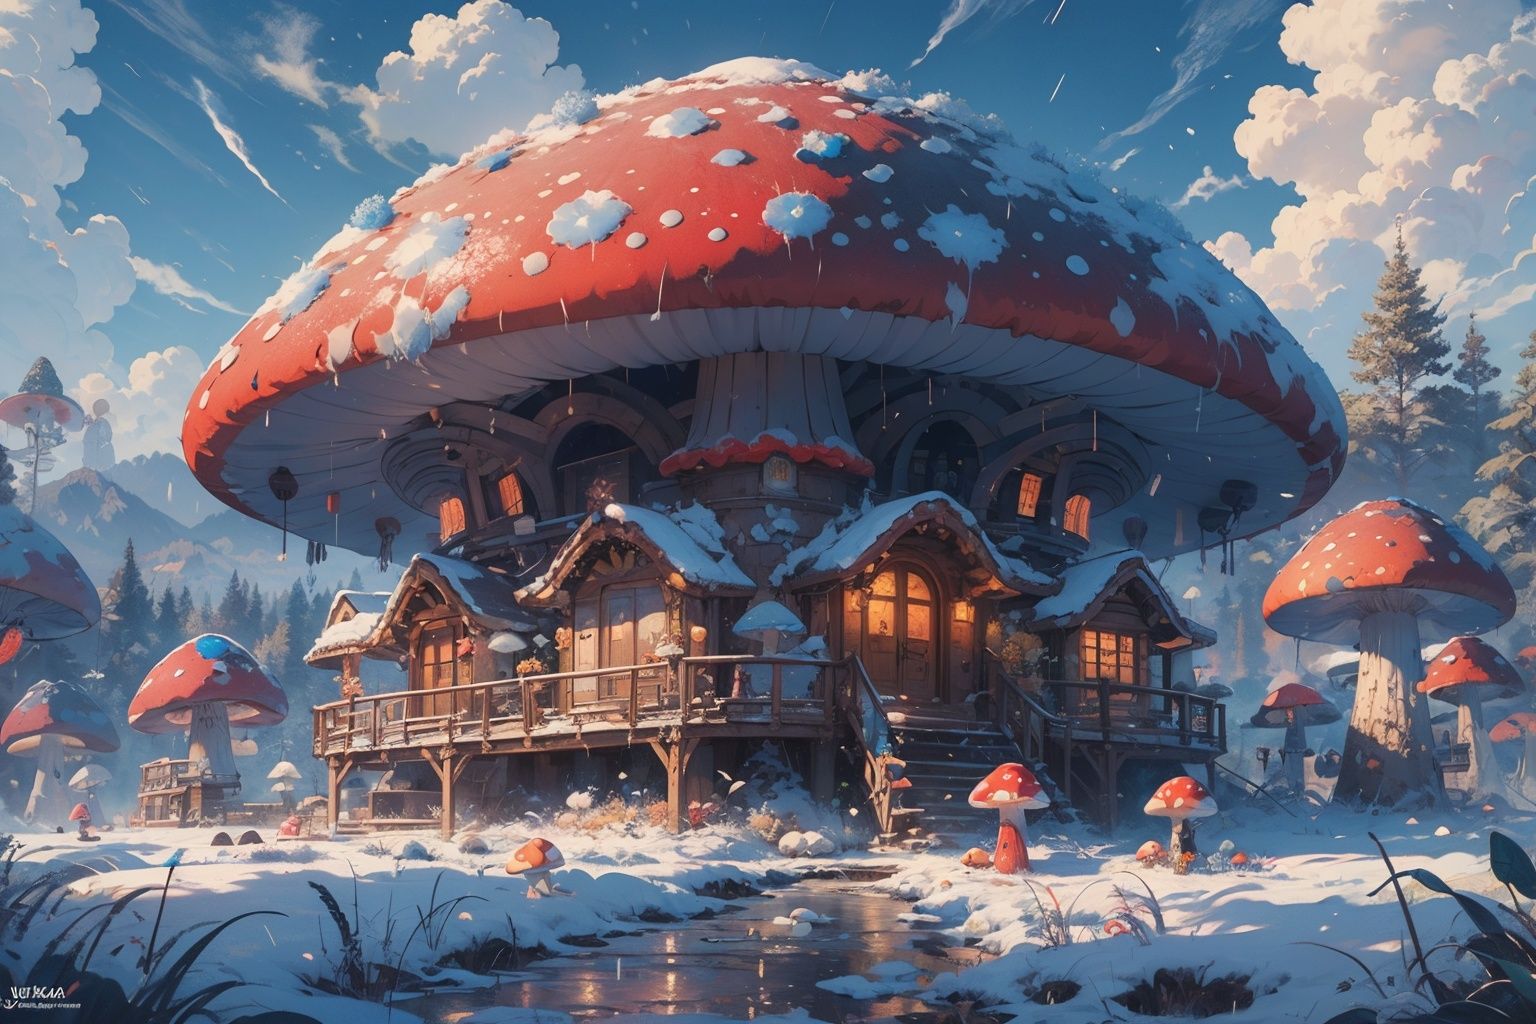 masterpiece,best quality,official art,extremely detailed CG unity 8k wallpaper,mushroom, glowing mushroom, mushroom house,after rain, rain, <lora:蘑菇屋:0.5>